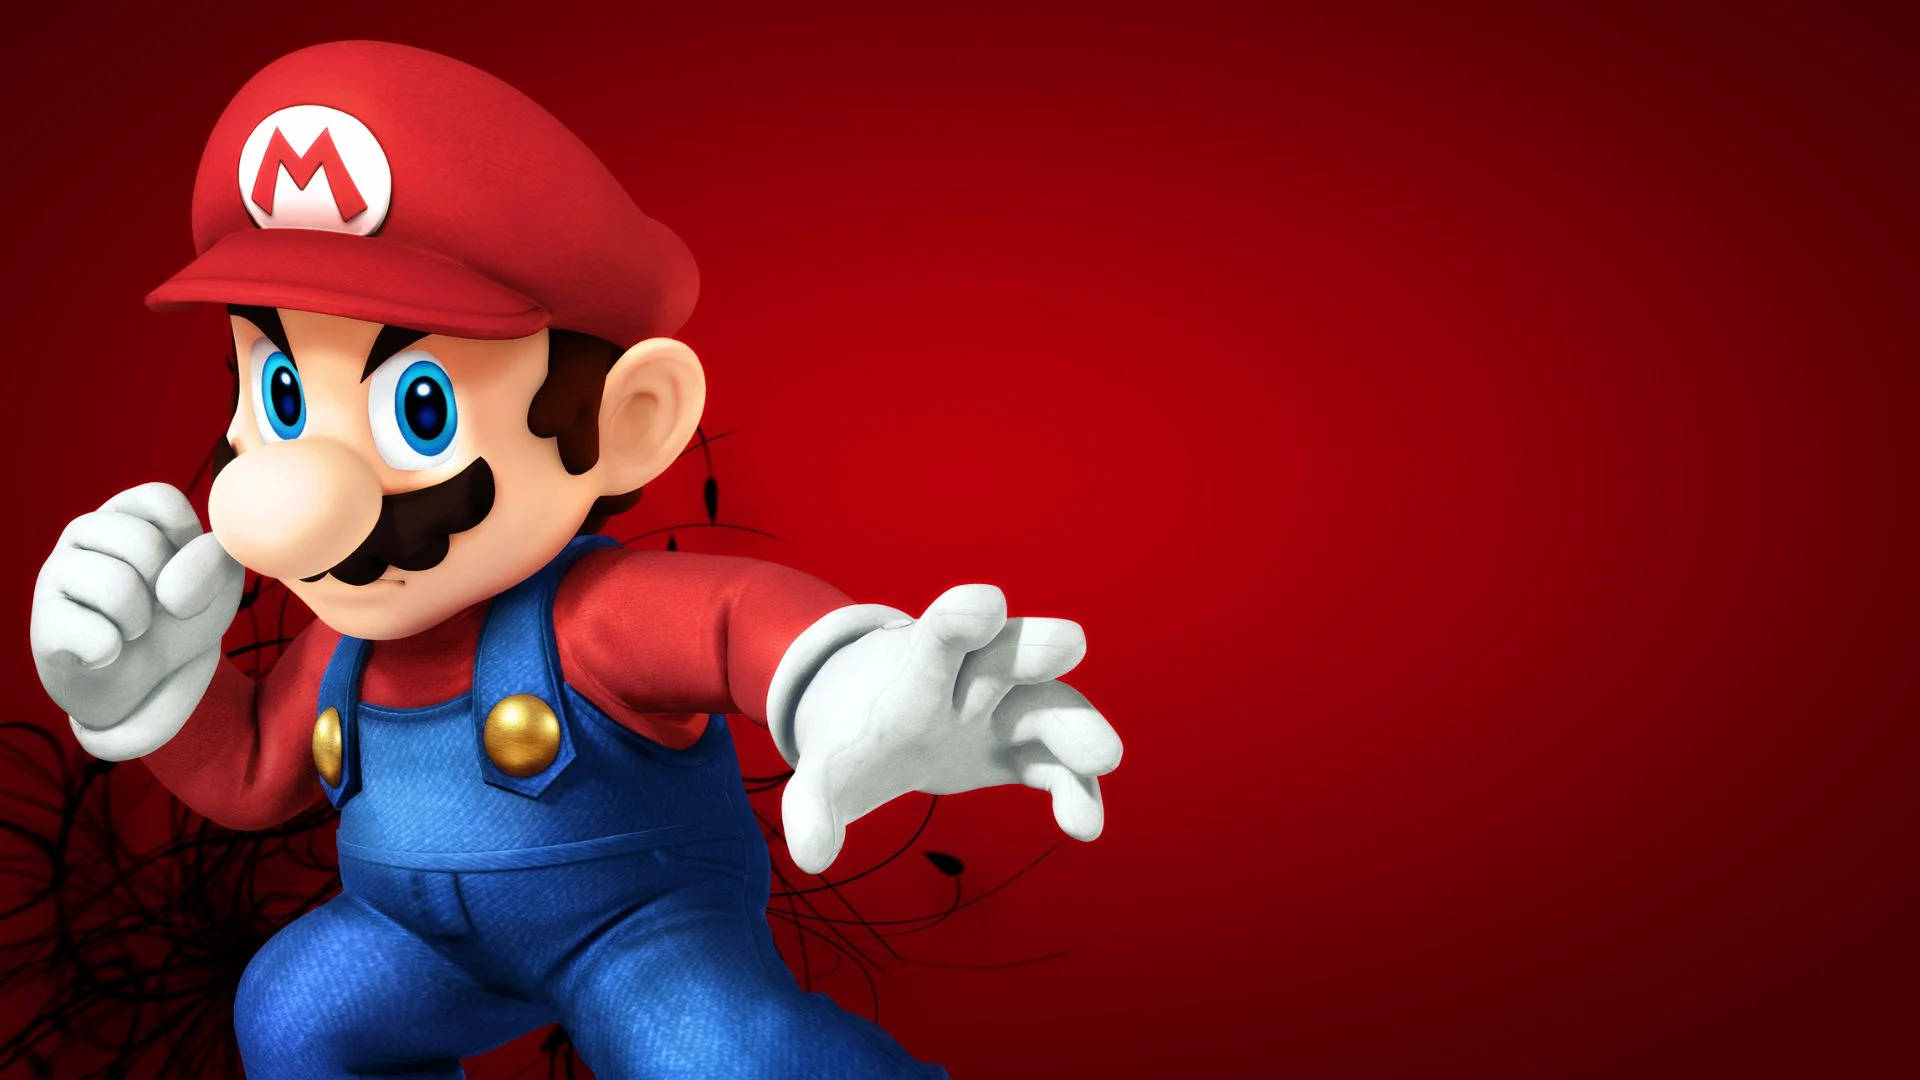 Nintendo Characters Super Mario Red Art Wallpaper